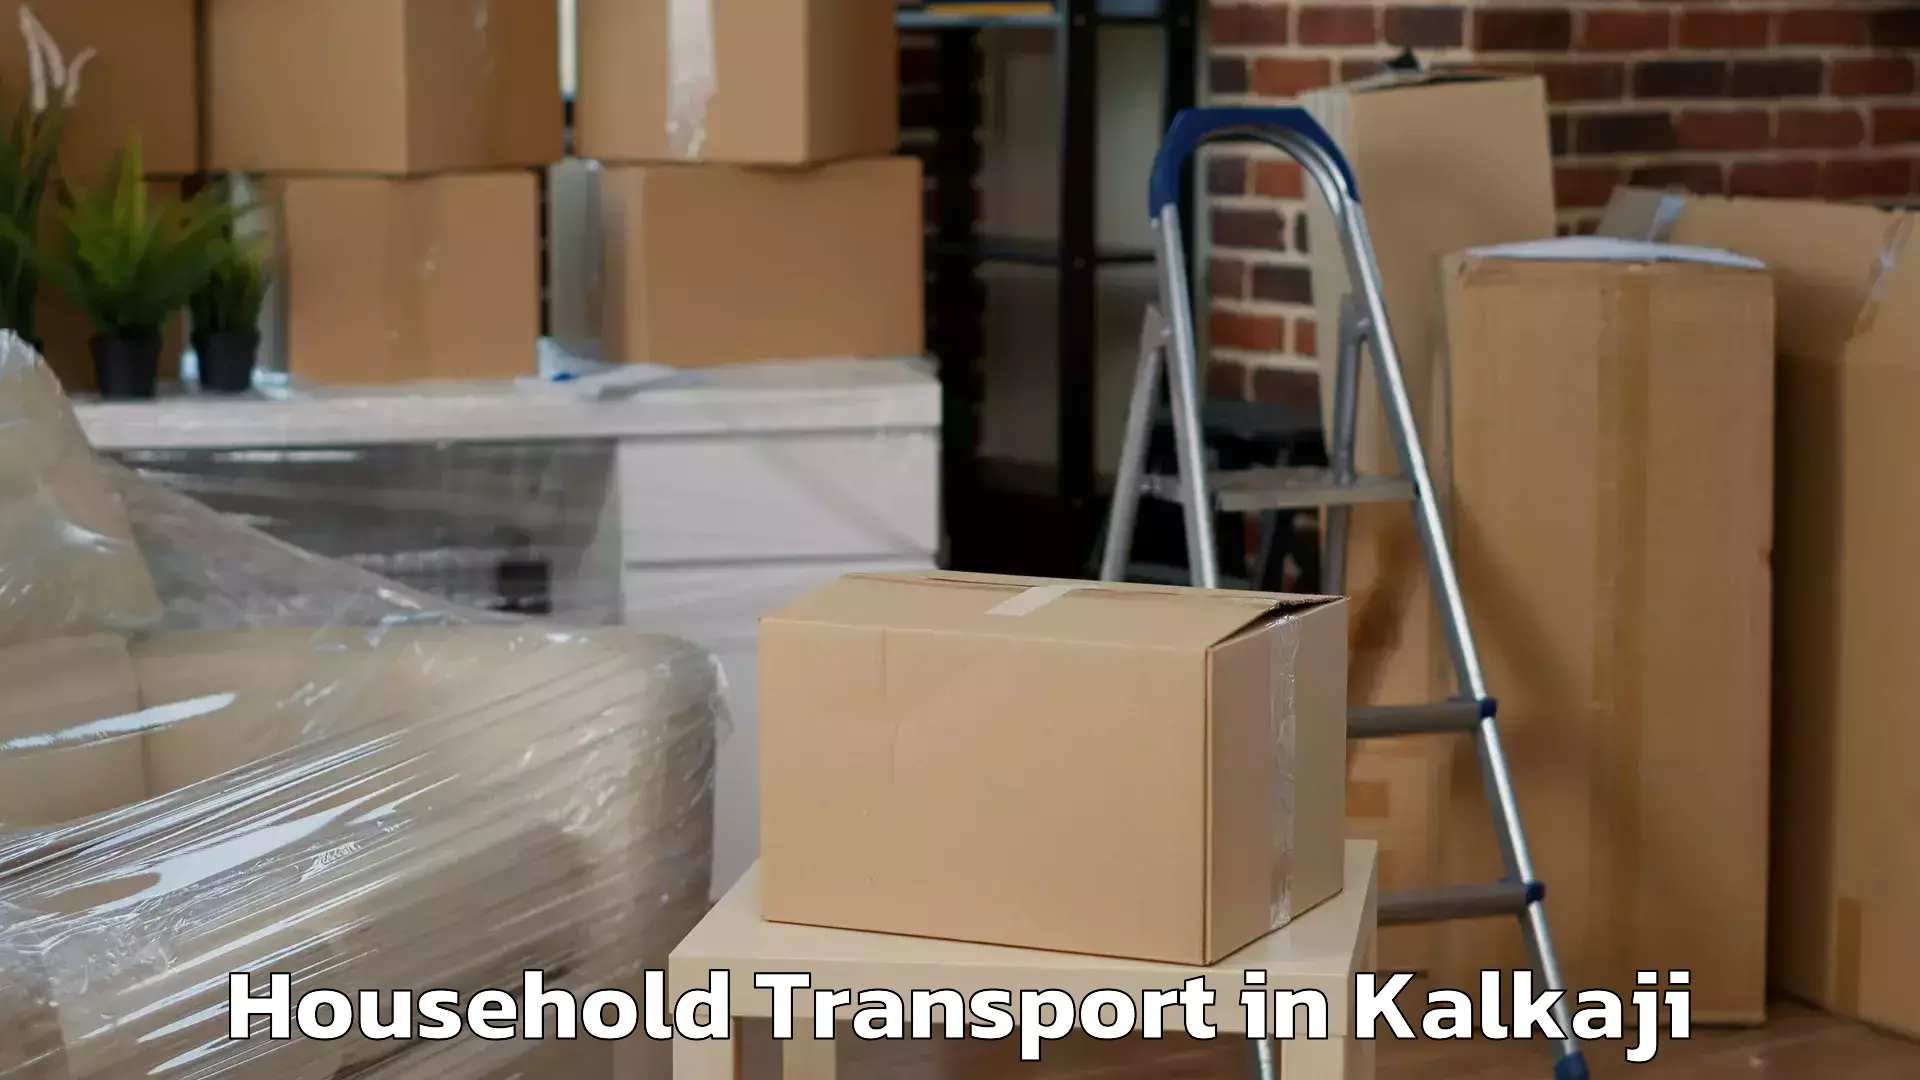 Household goods transport in Kalkaji